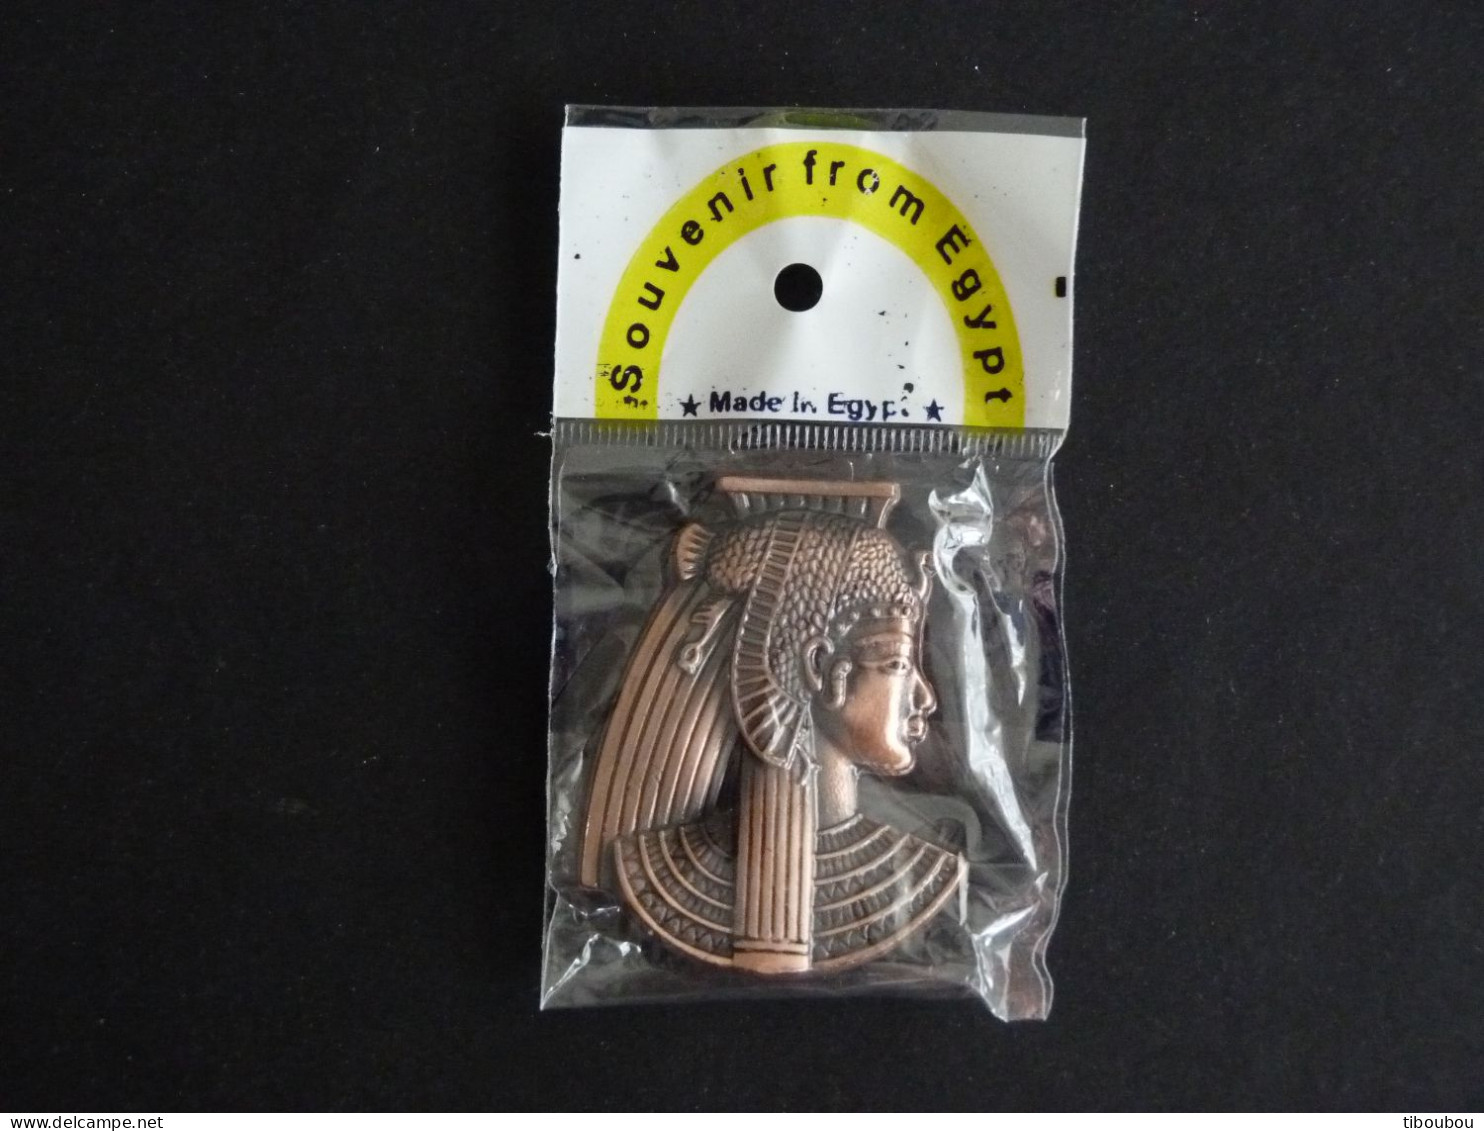 MAGNET EN METAL SOUVENIR FROM EGYPT EGYPTE SOUS BLISTER - CLEOPATRE NEFERTITI - Tourisme